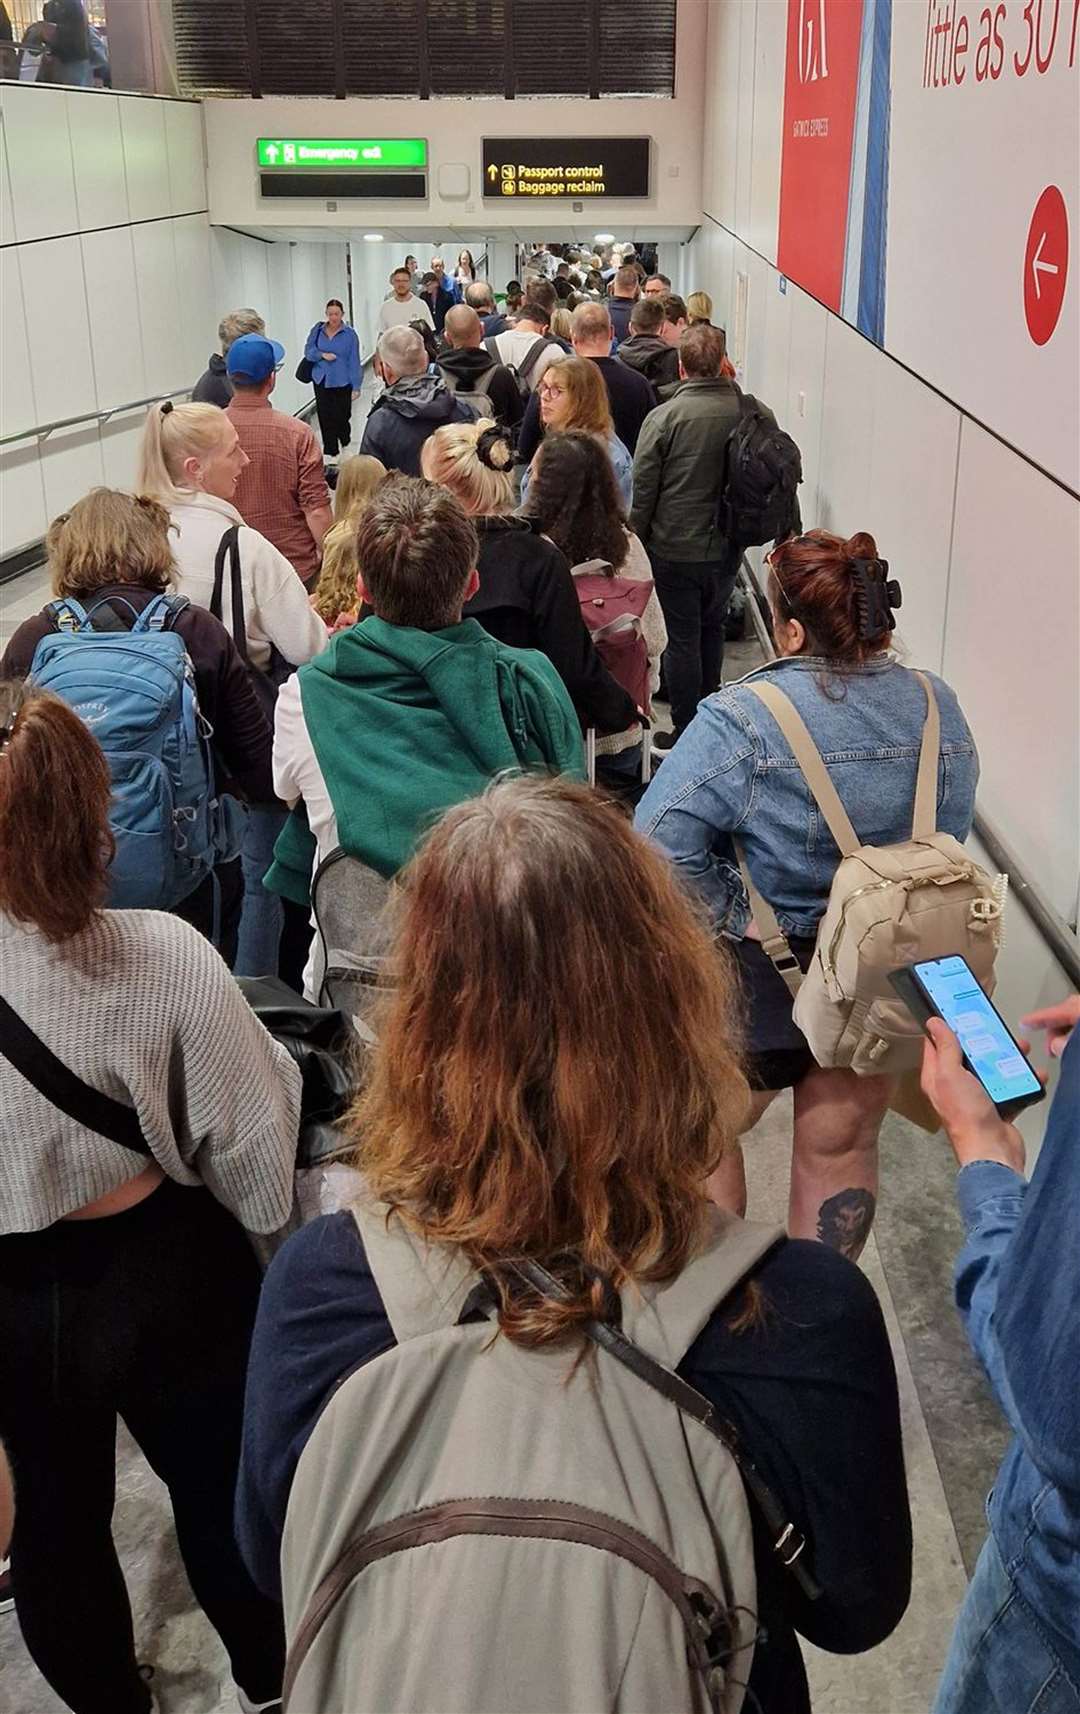 Long queues to go through passport checks at Gatwick Airport (Paul Uwagboe/PA)